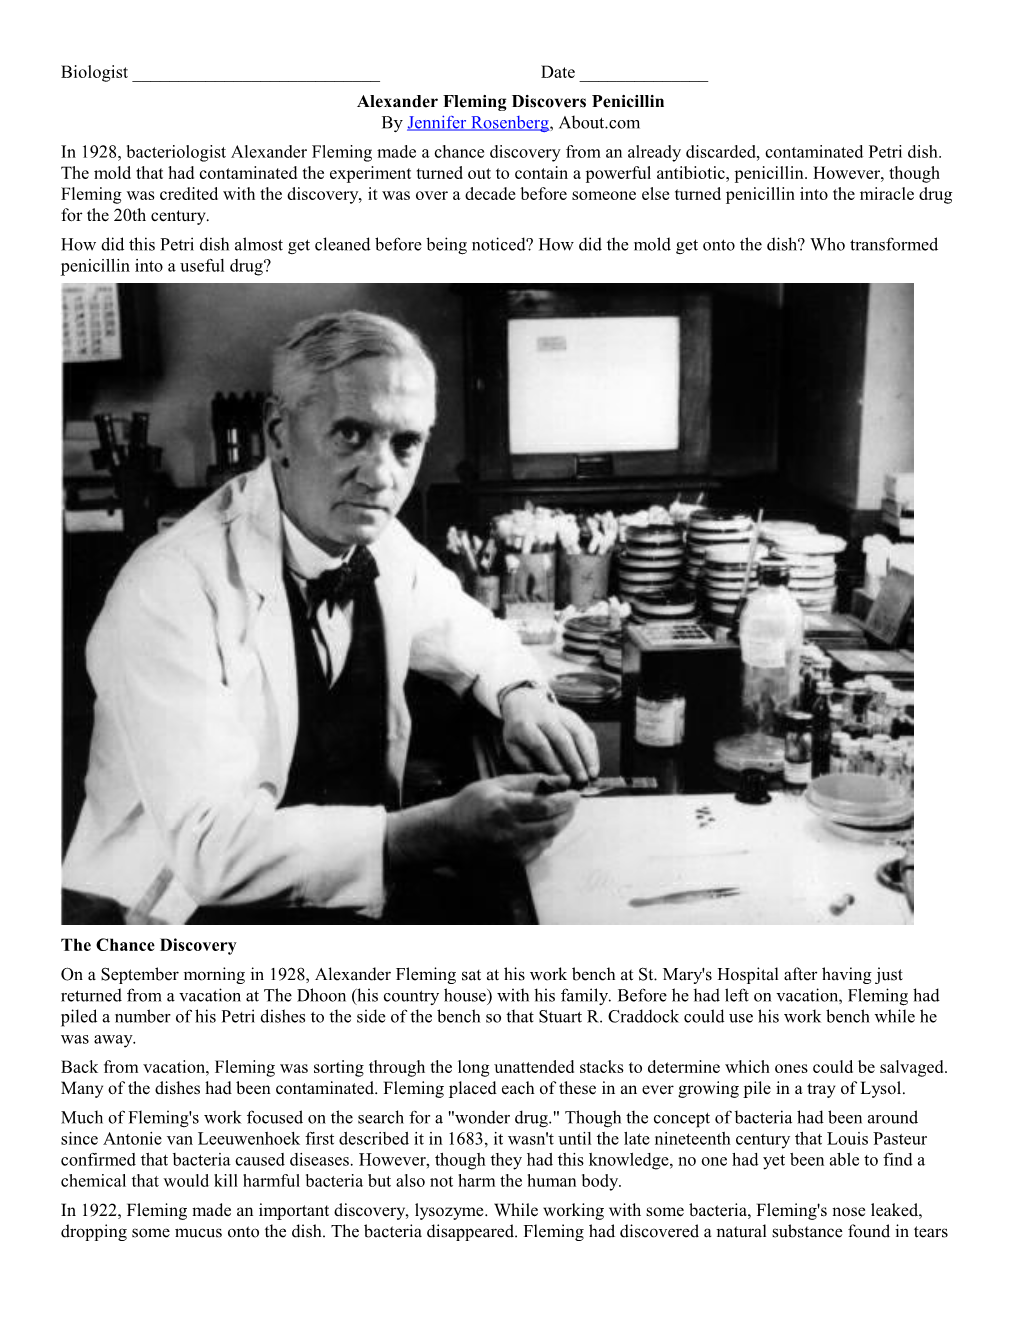 Alexander Fleming Discoverspenicillin by Jennifer Rosenberg, About.Com